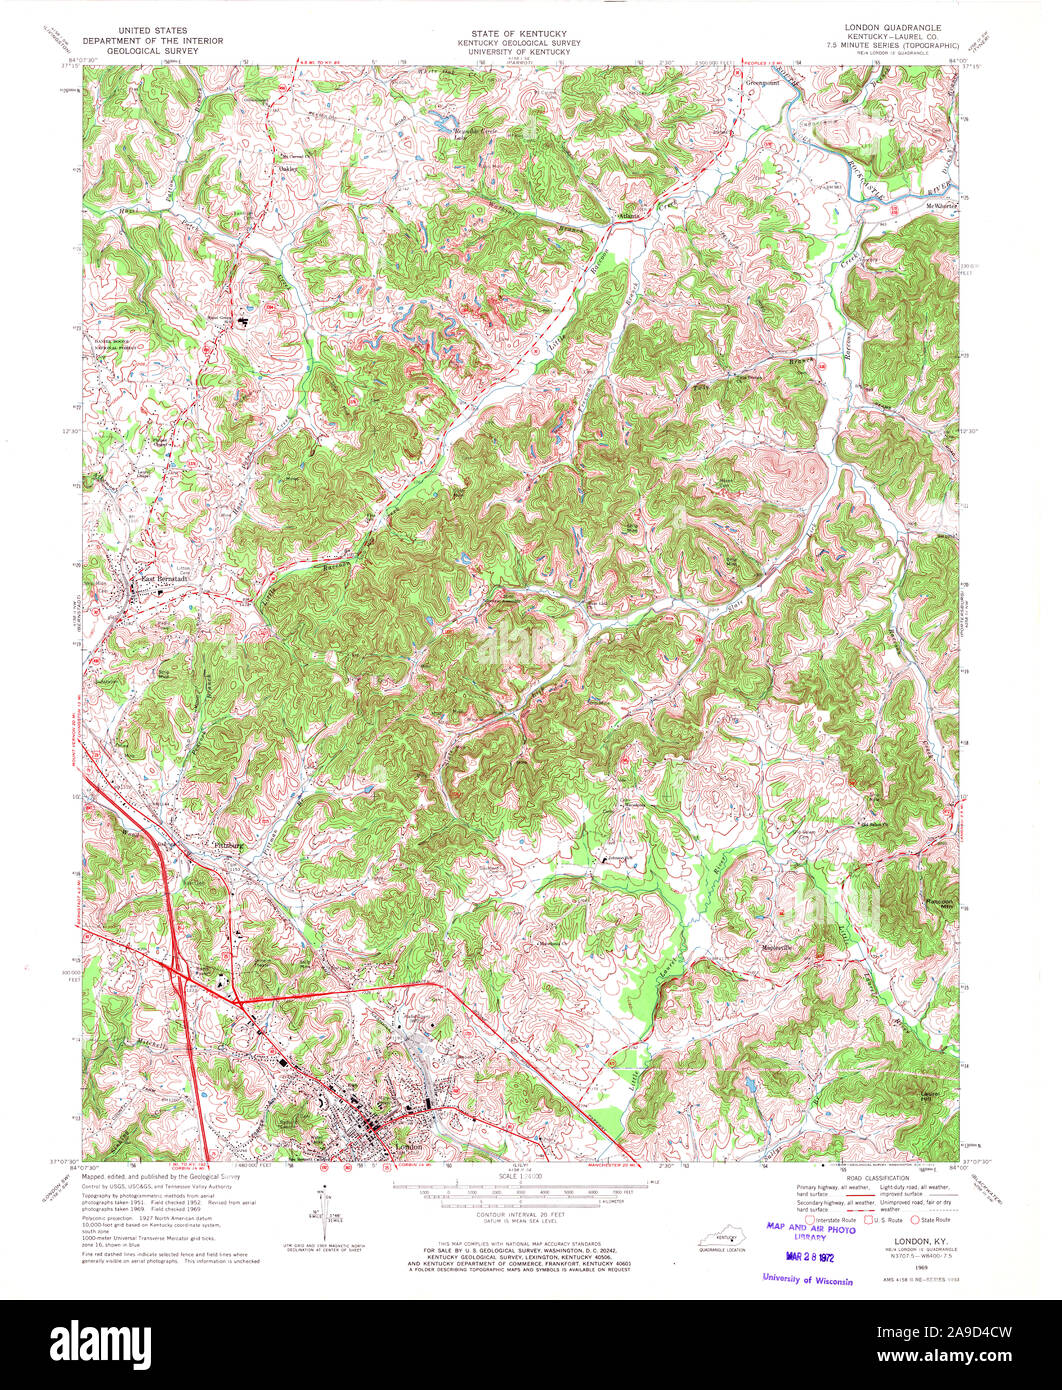 USGS TOPO Map Kentucky KY London 709141 1969 24000 Stock Photo